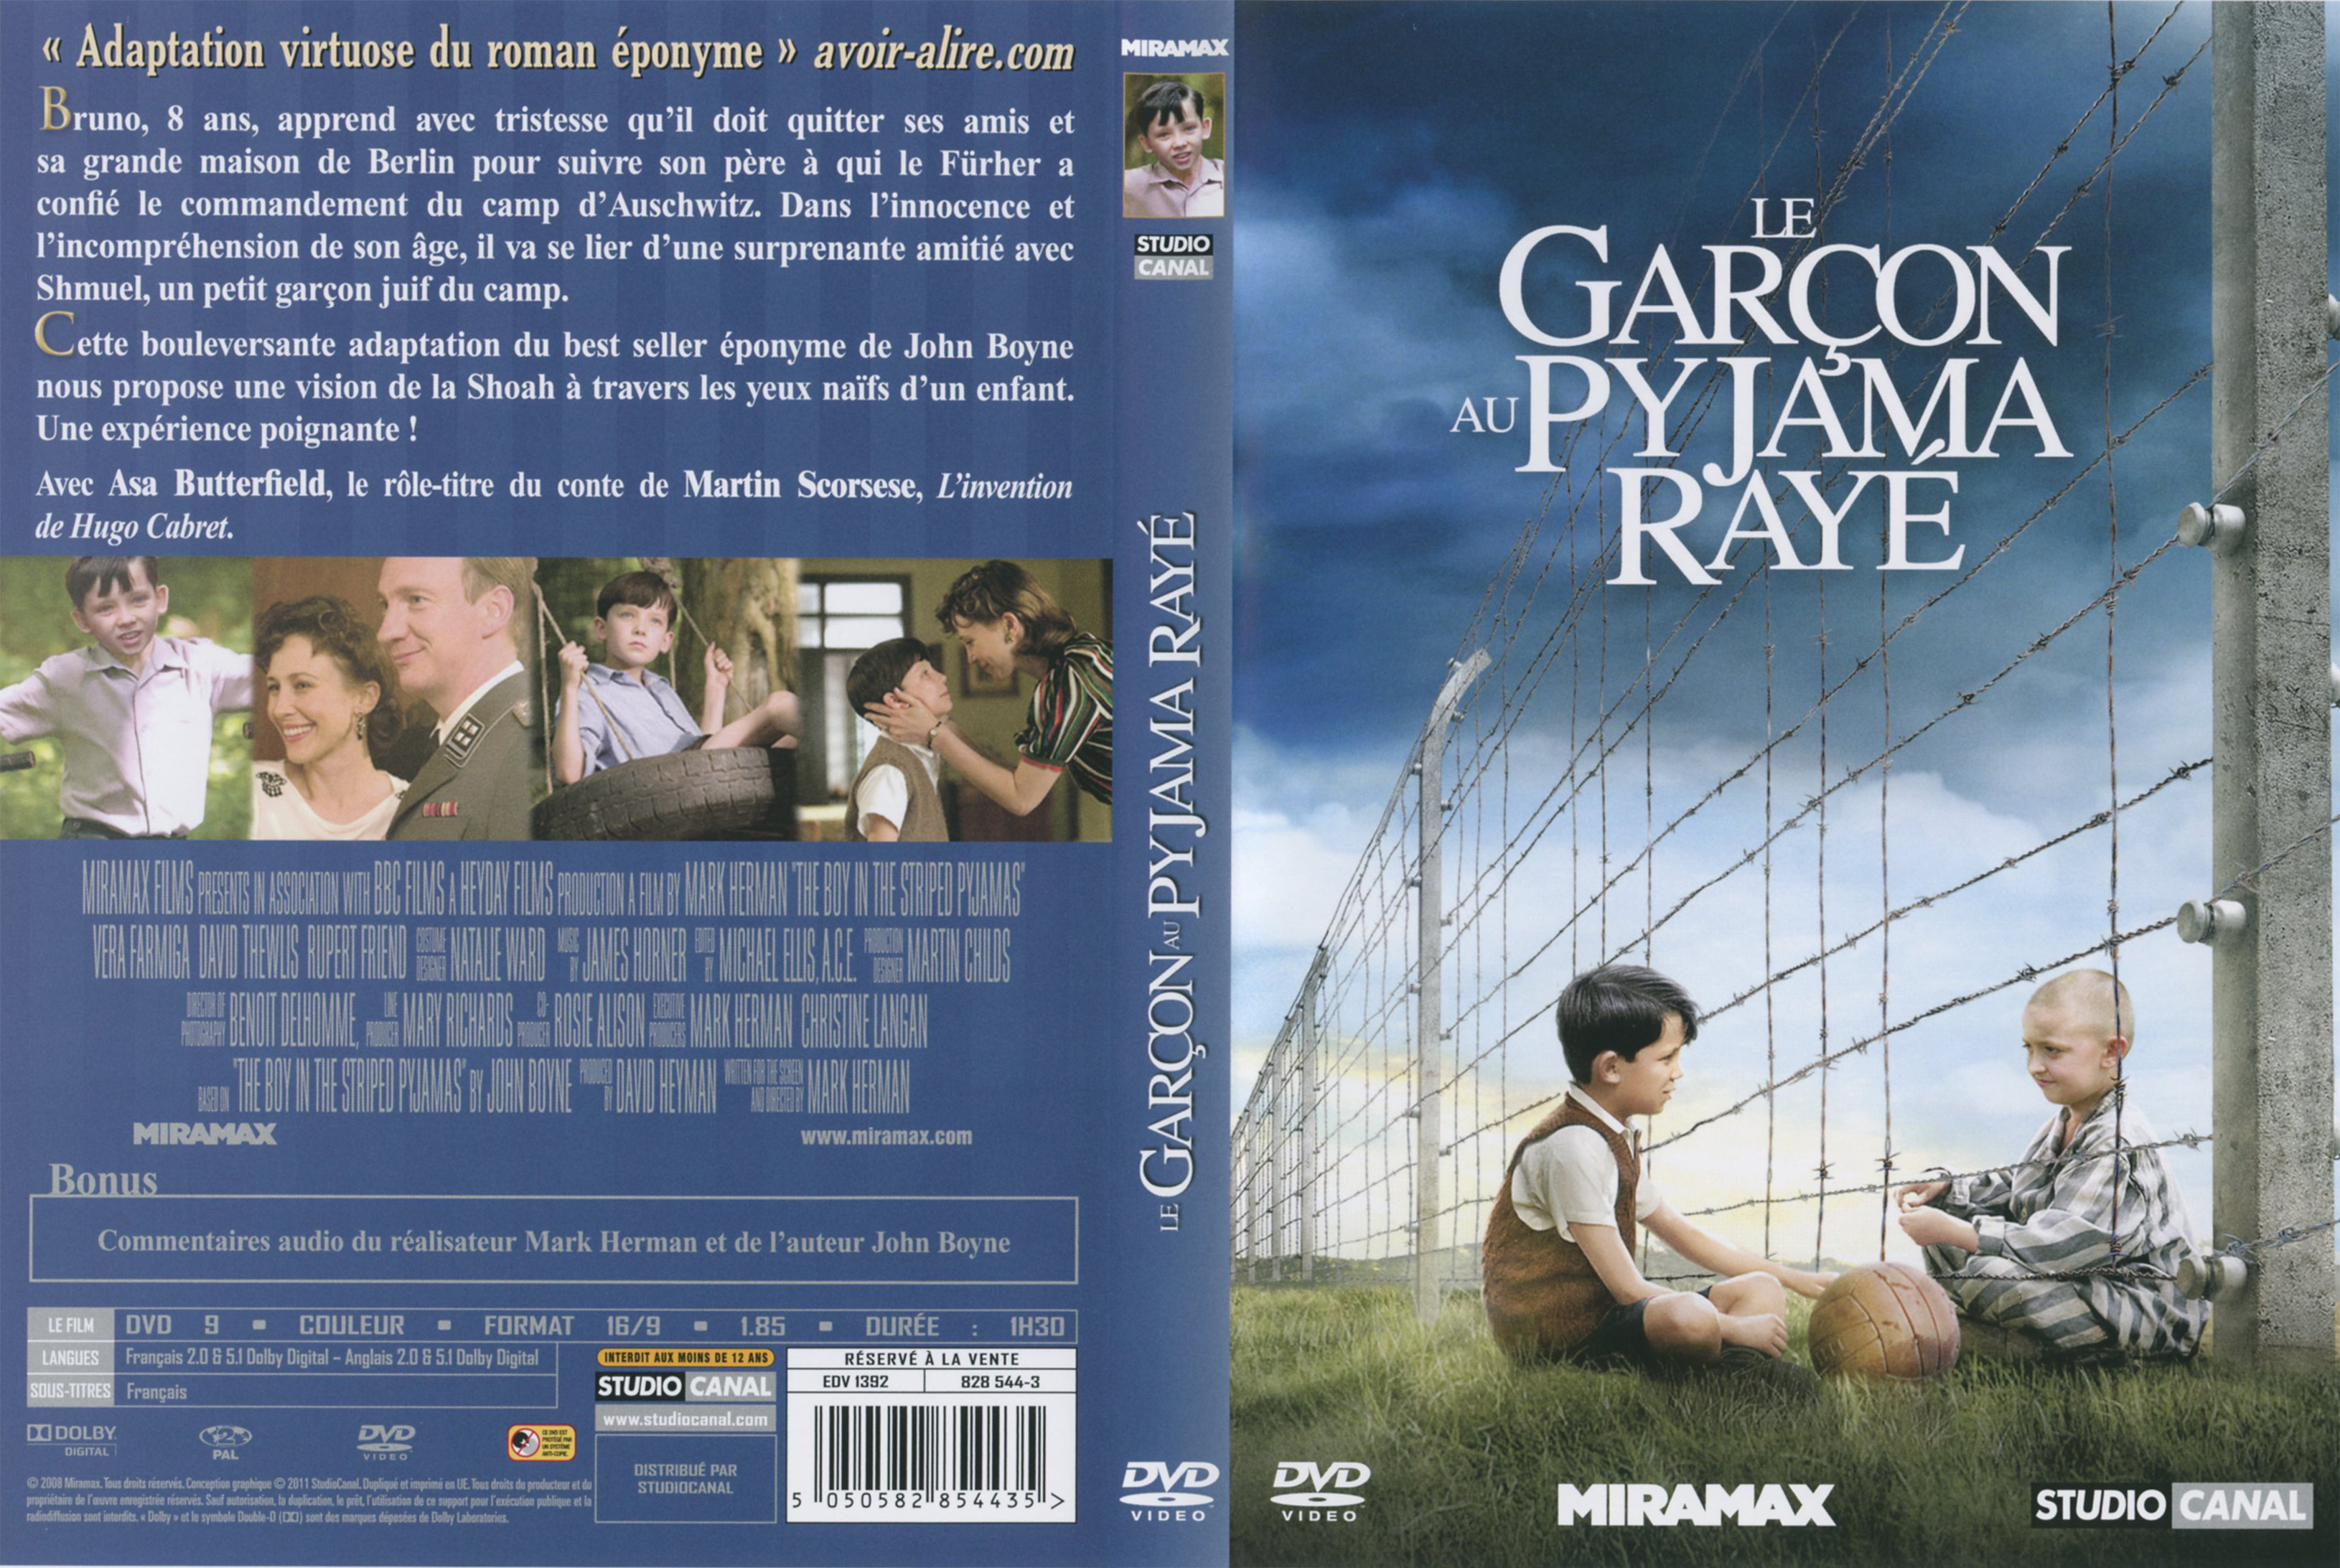 Jaquette DVD Le garcon au pyjama ray v2